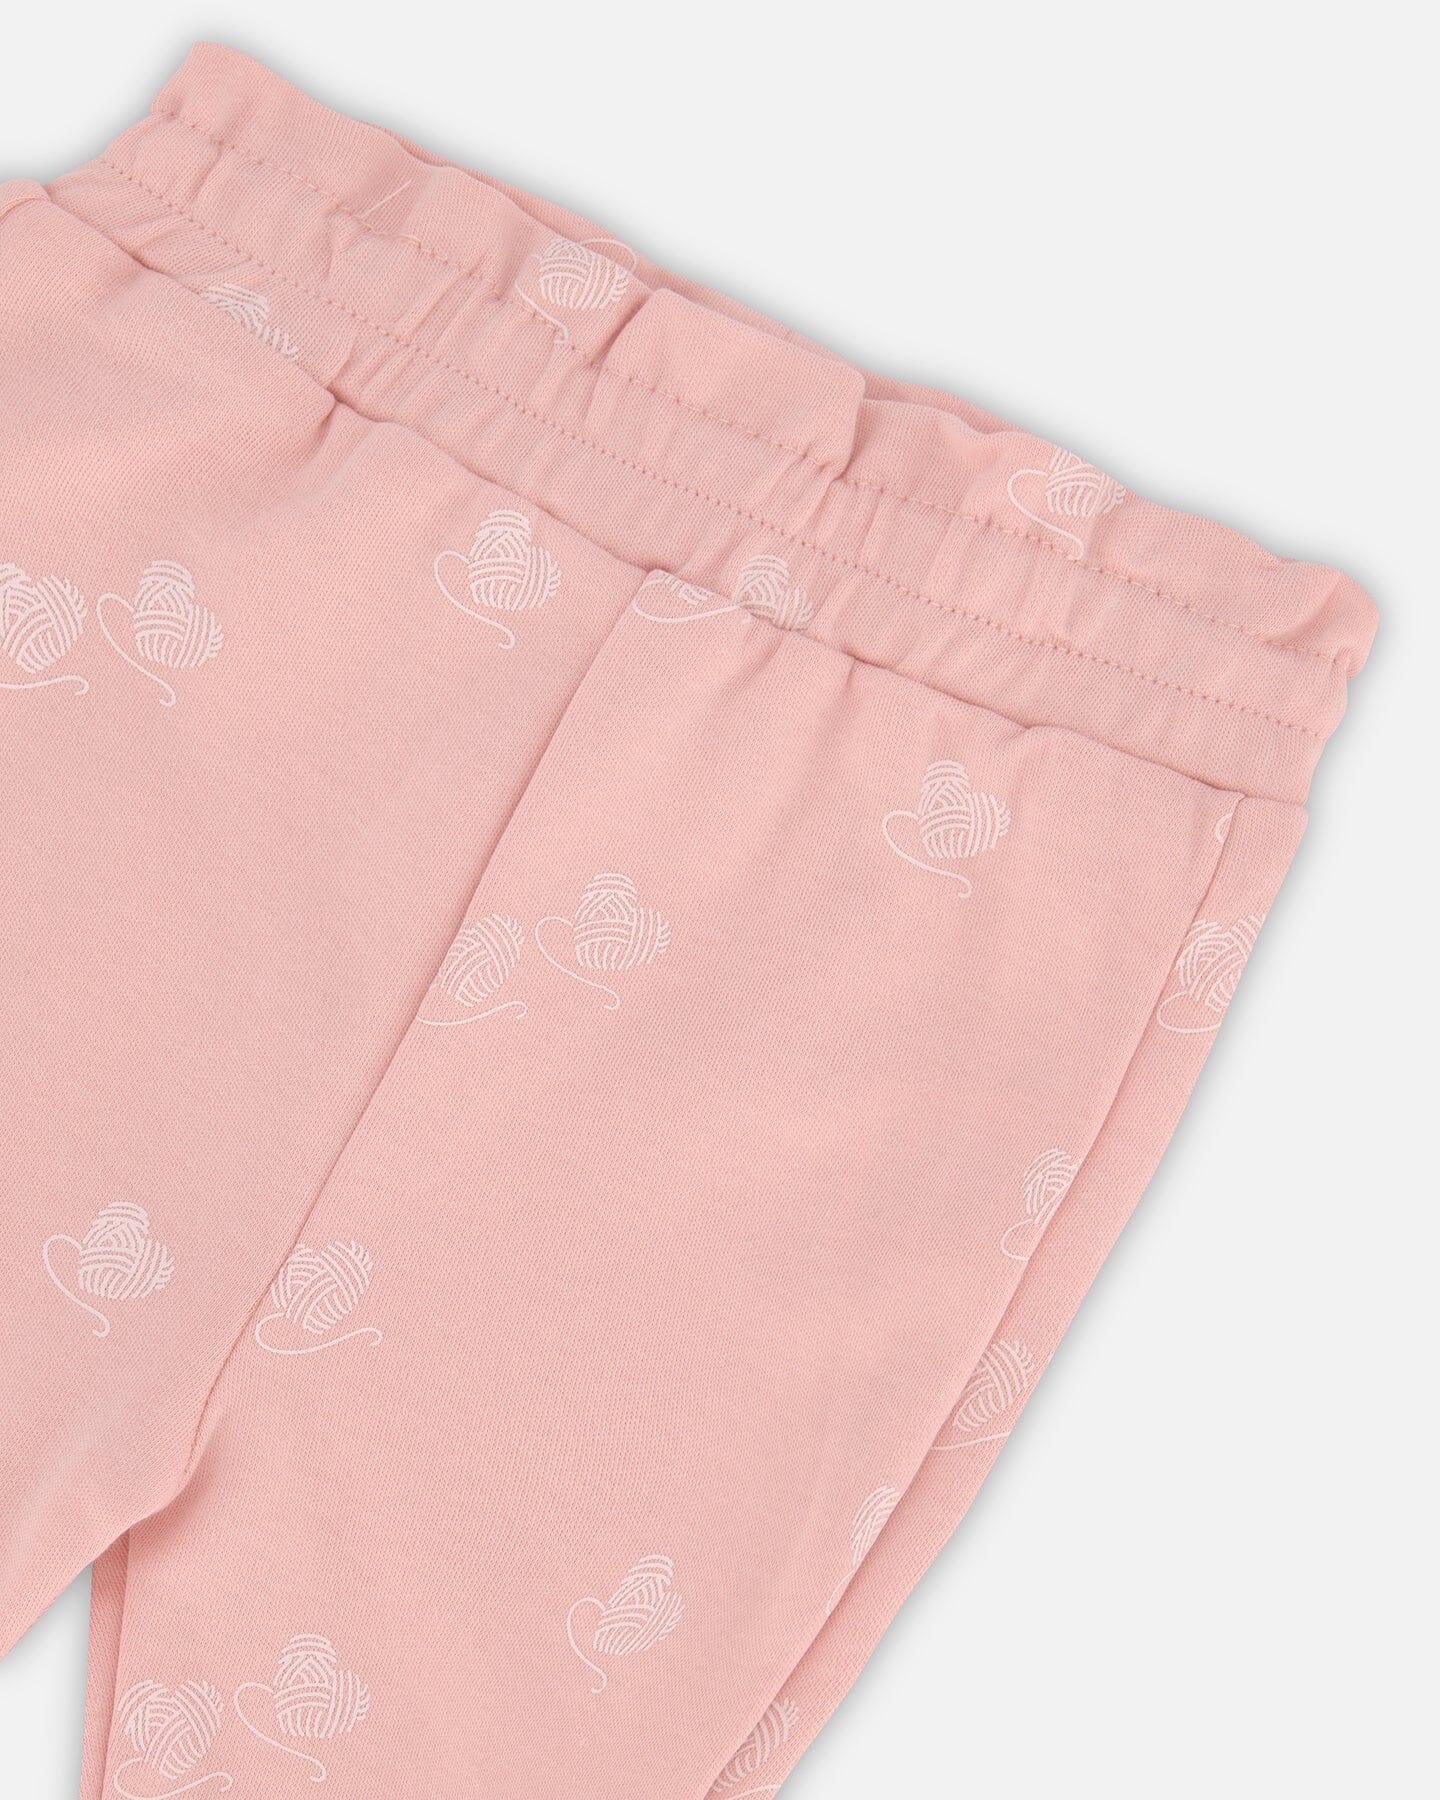 Organic Cotton Printed Top And Pants Set Powder Pink Little Heart Of Wool Sets Deux par Deux 